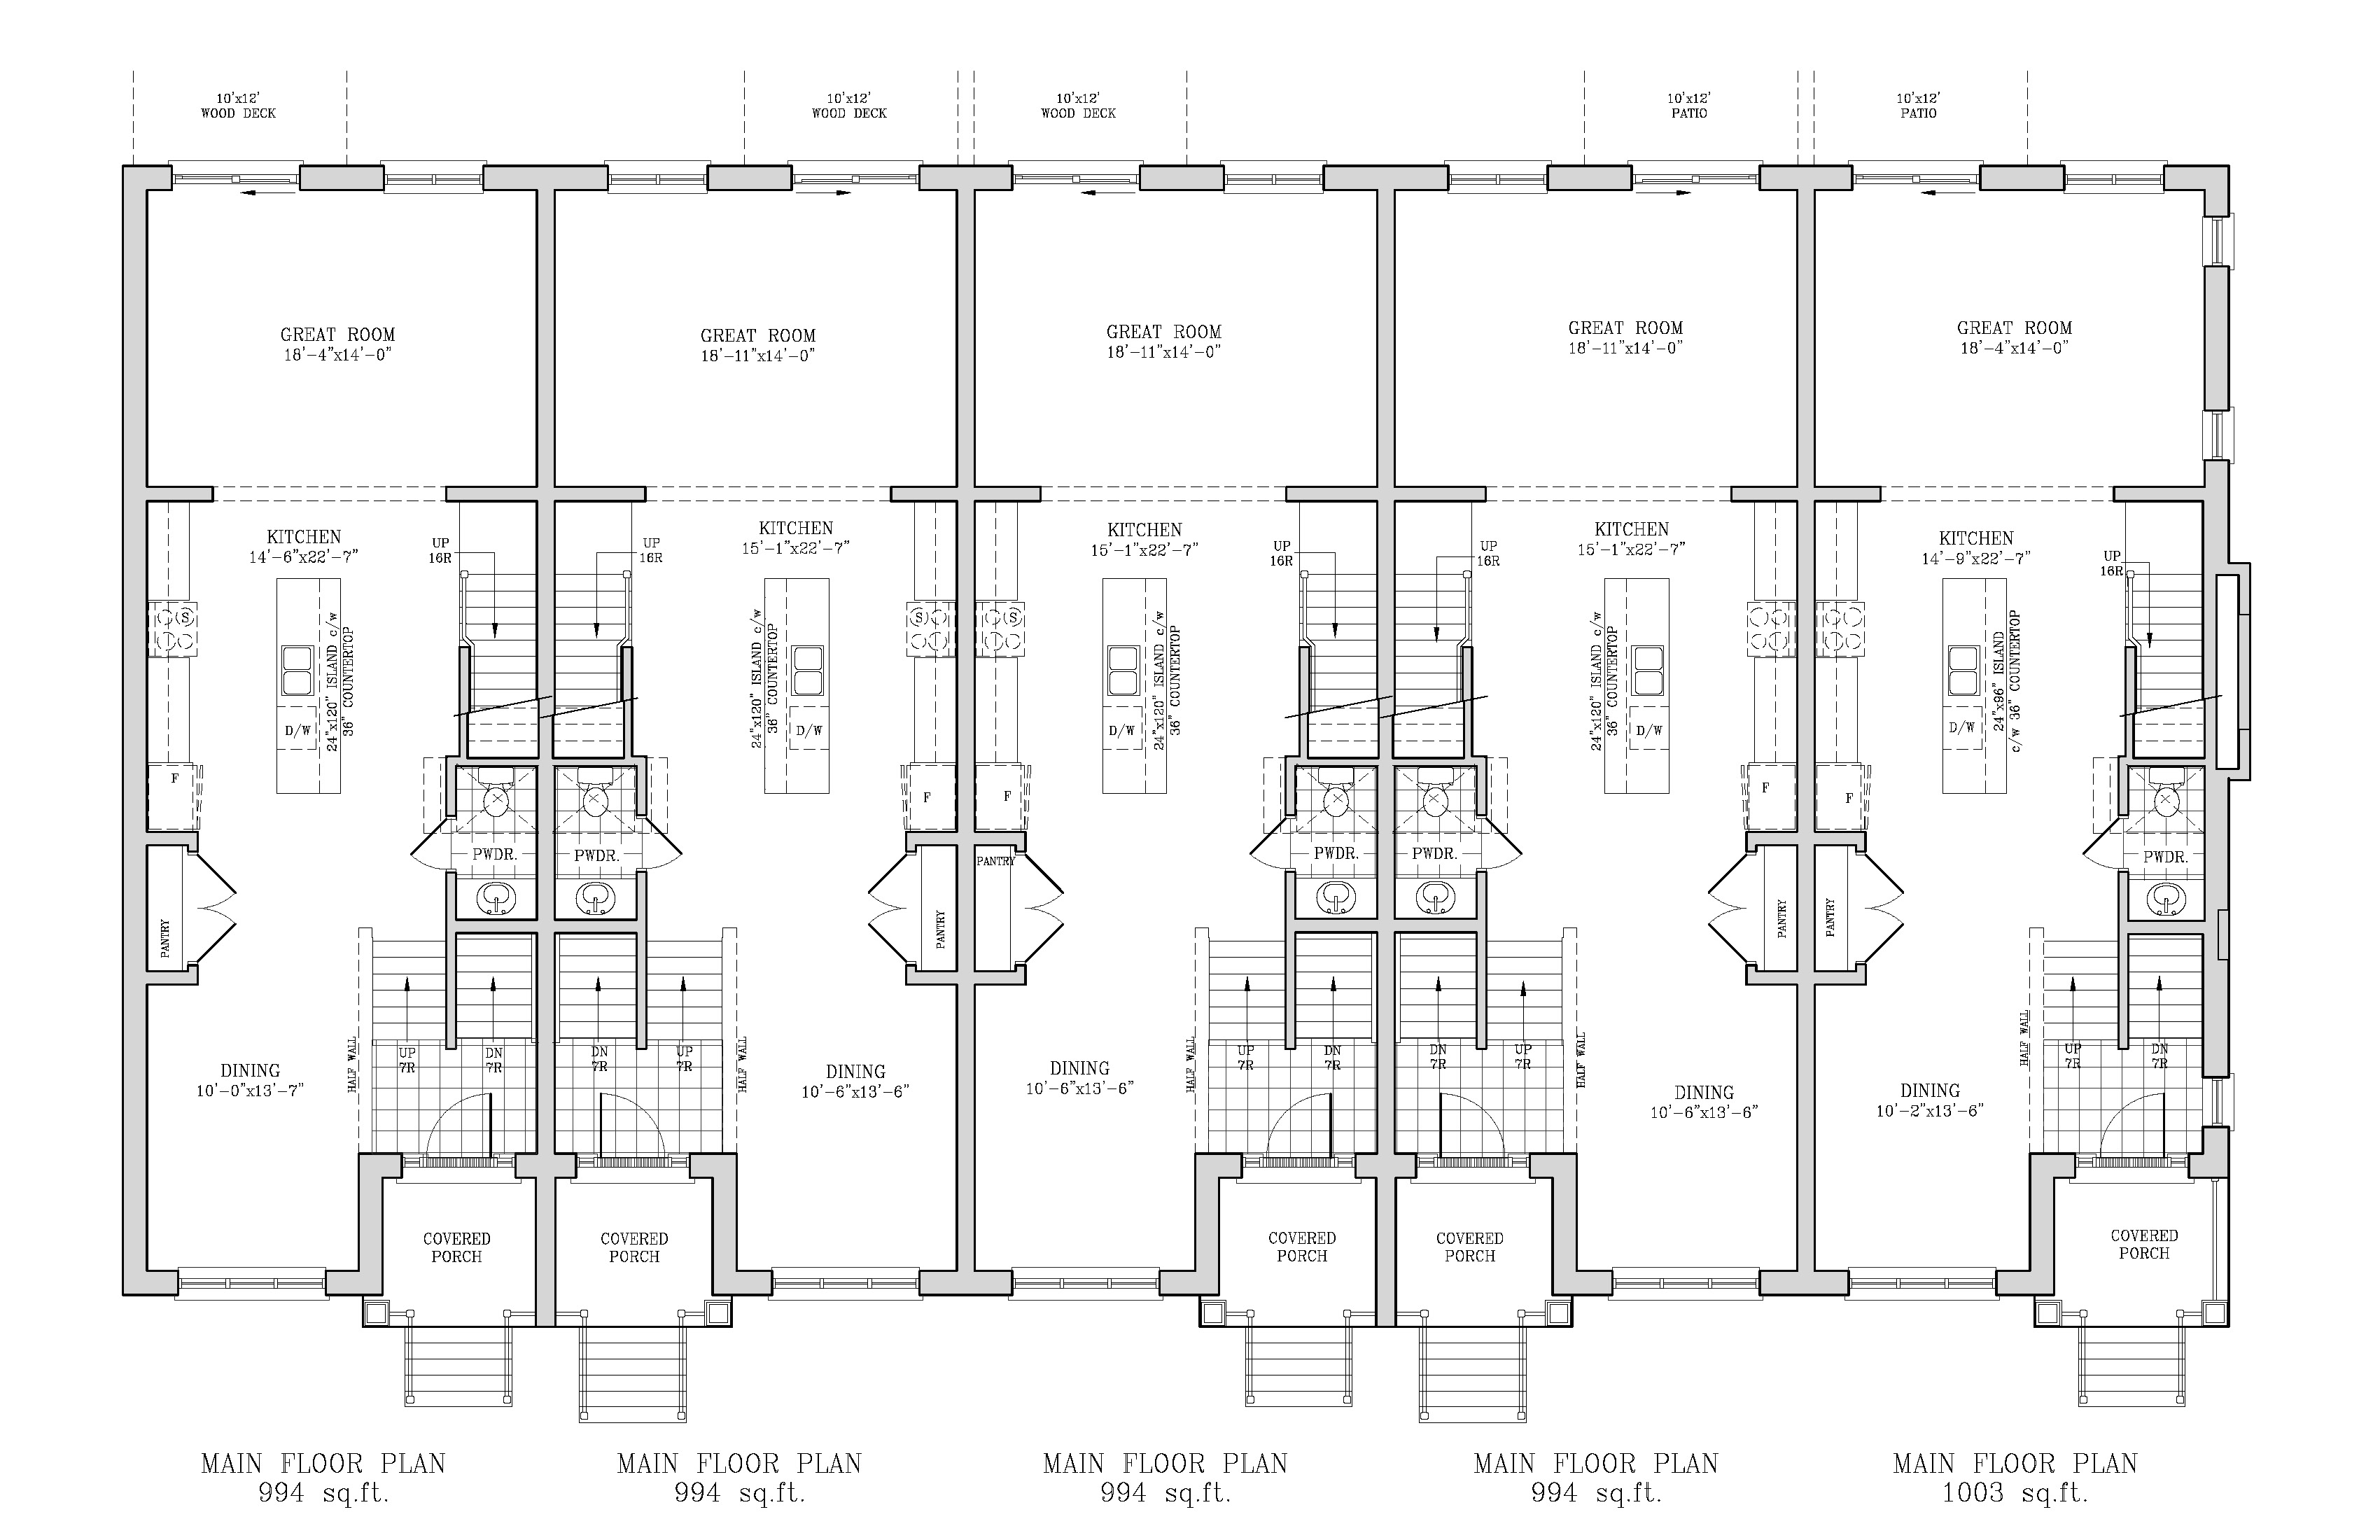 Enclave Kay home designs 1-5 main floor plan